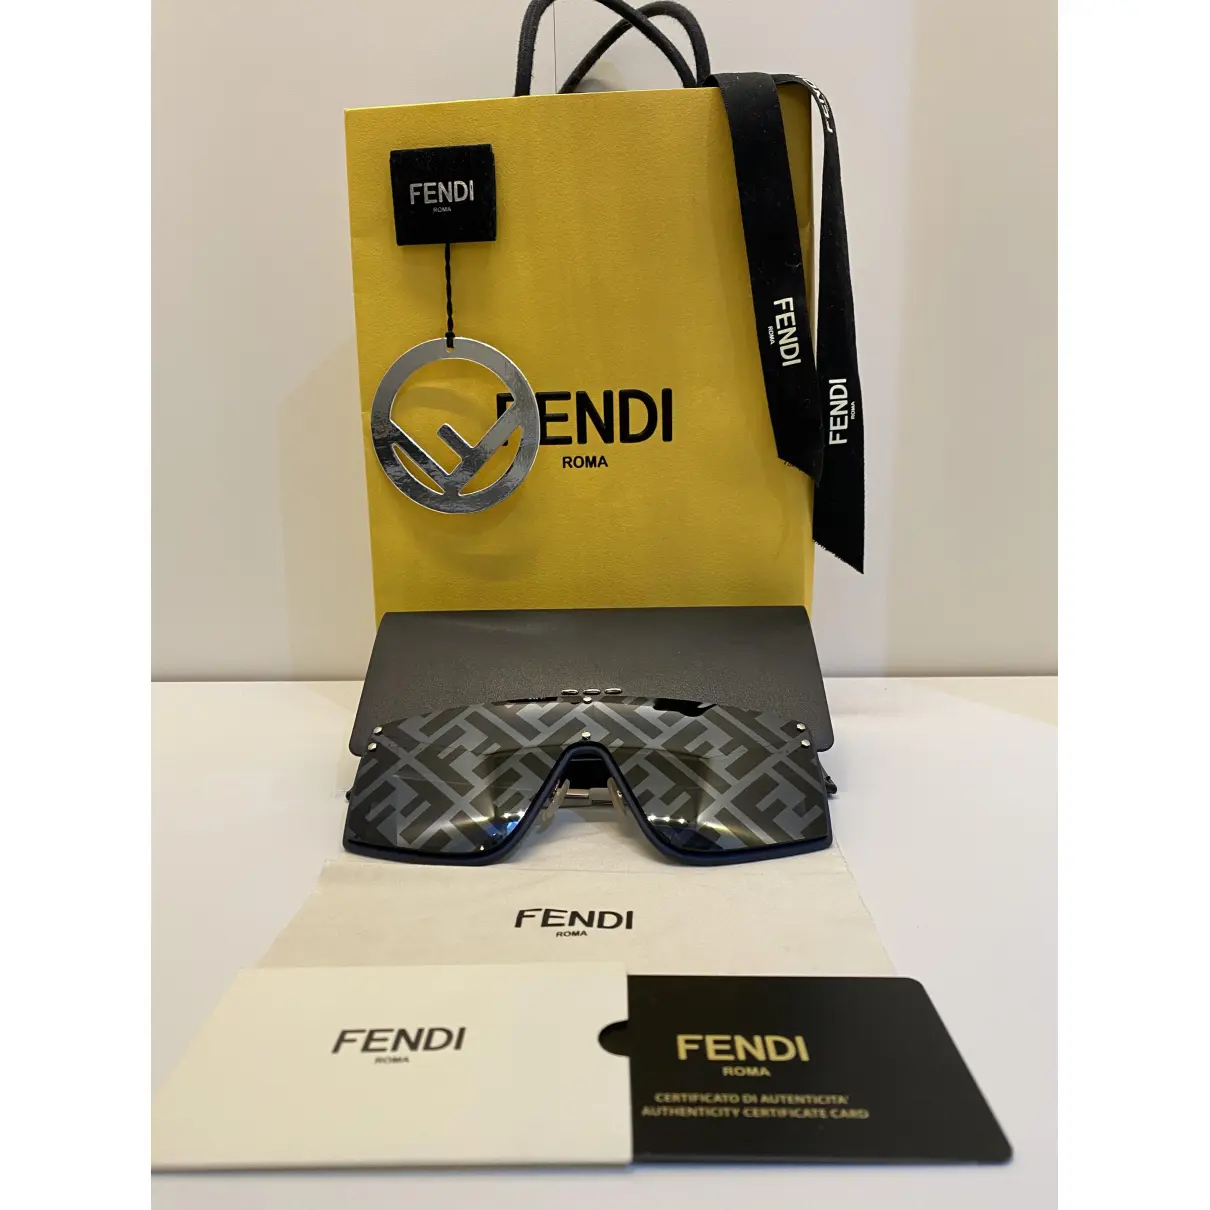 Buy Fendi Goggle glasses online